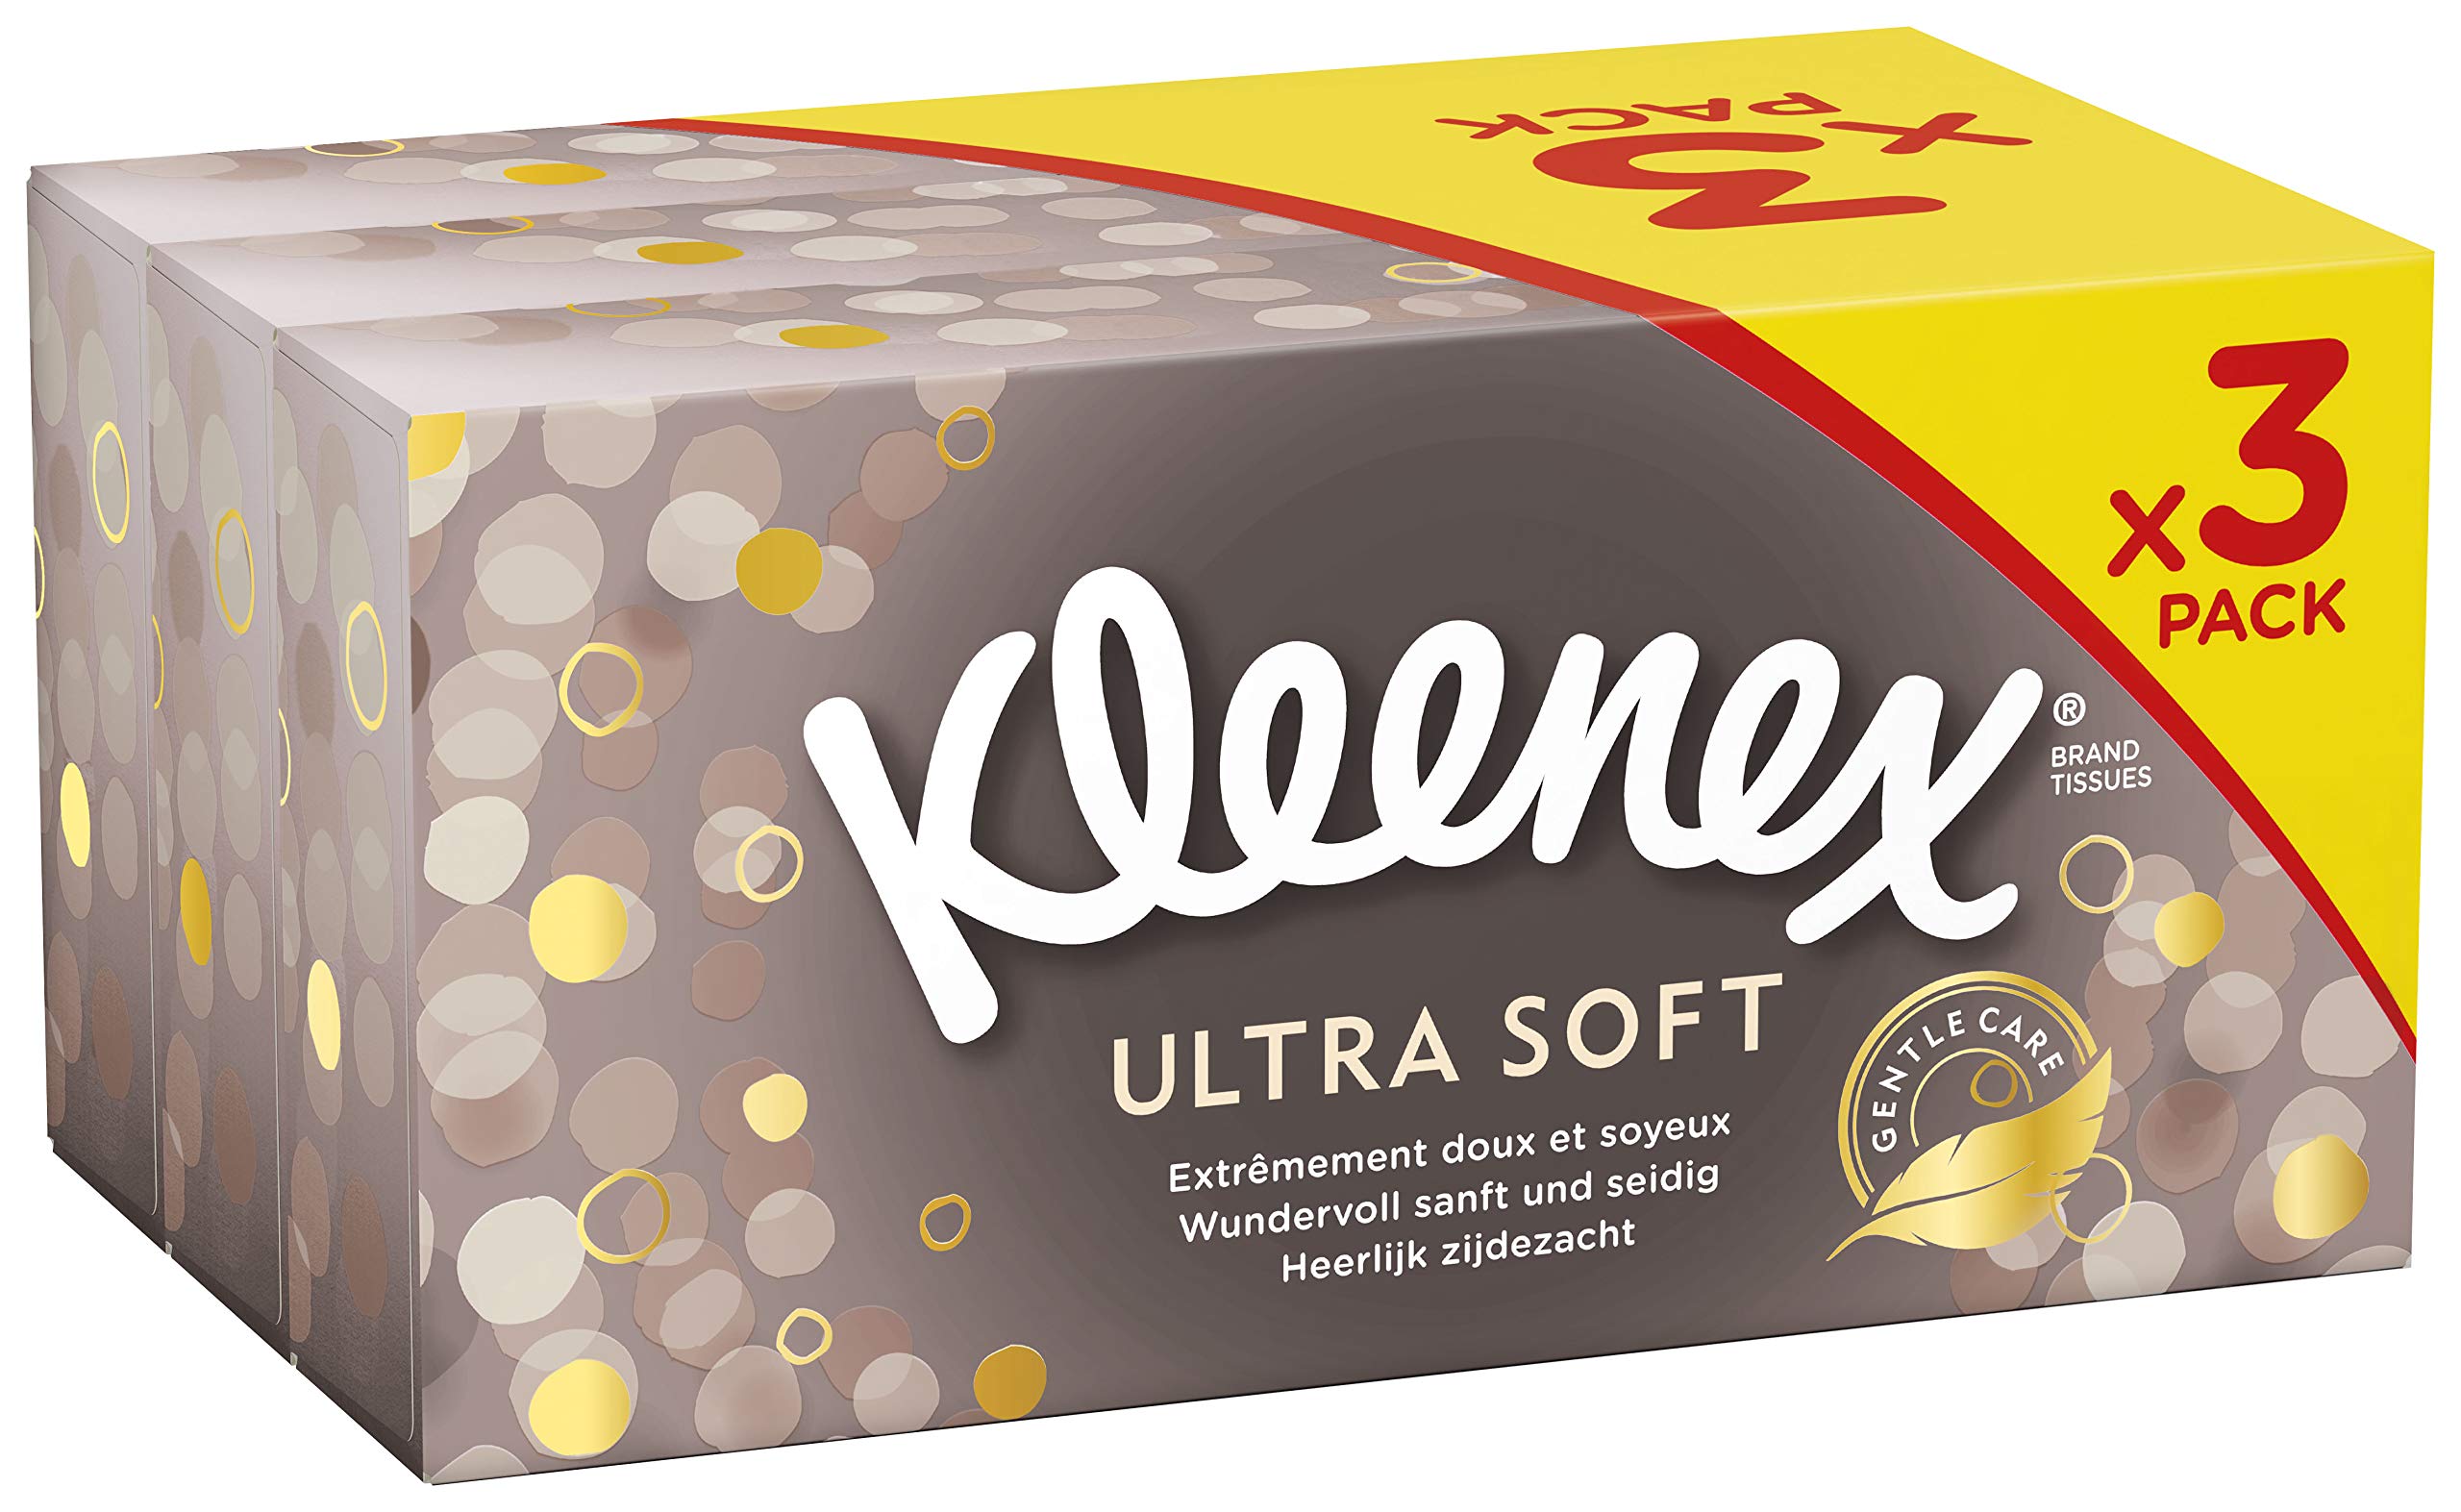 Kleenex Tissues - Ultra Soft Tissues, 12 Tissue Boxes (960 Facial Tissues)